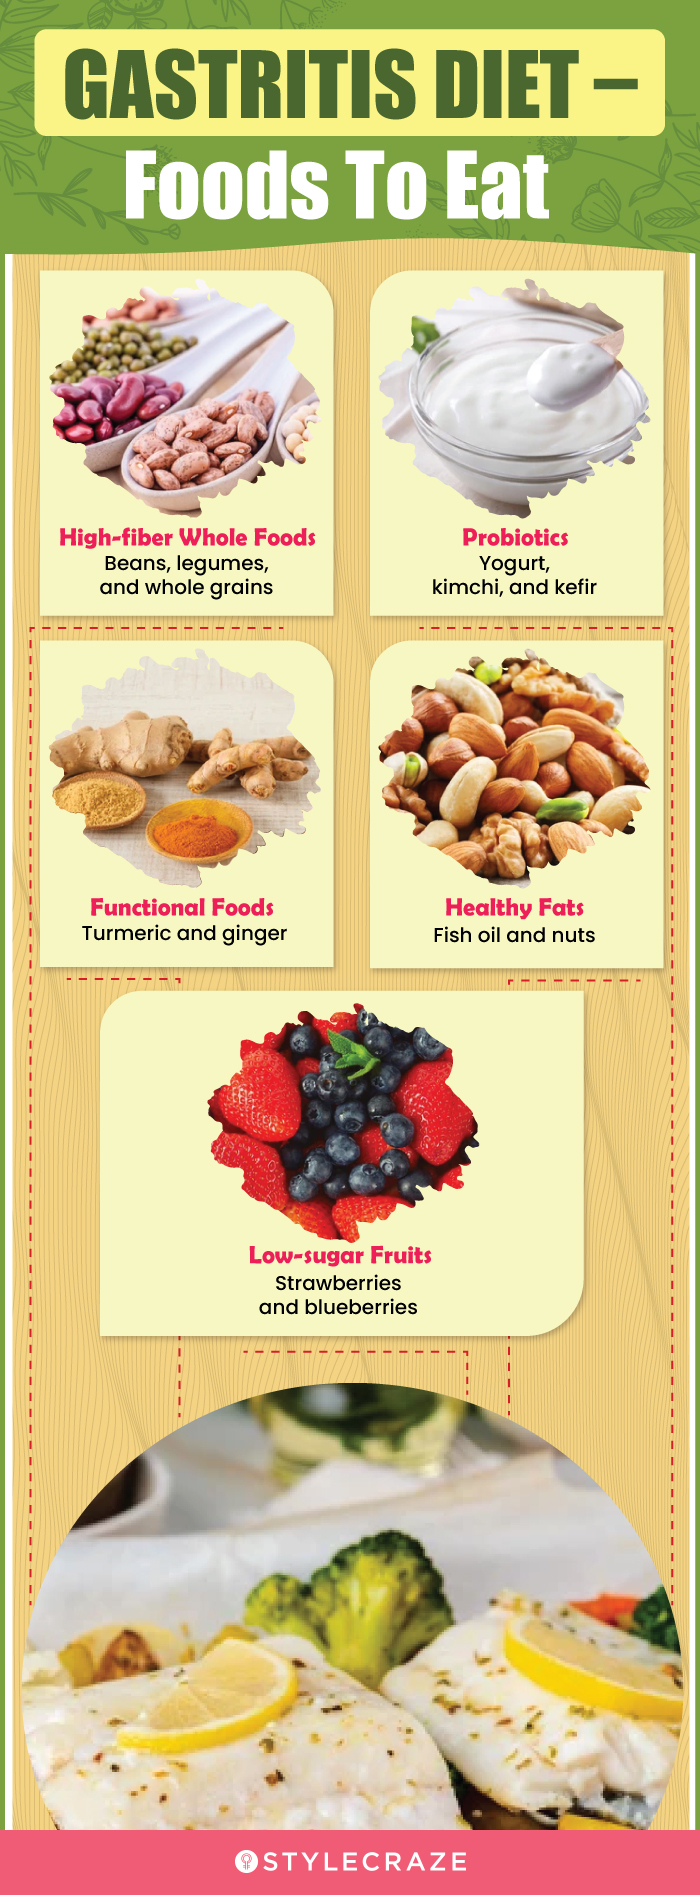 gastritis diet – foods to eat (infographic)